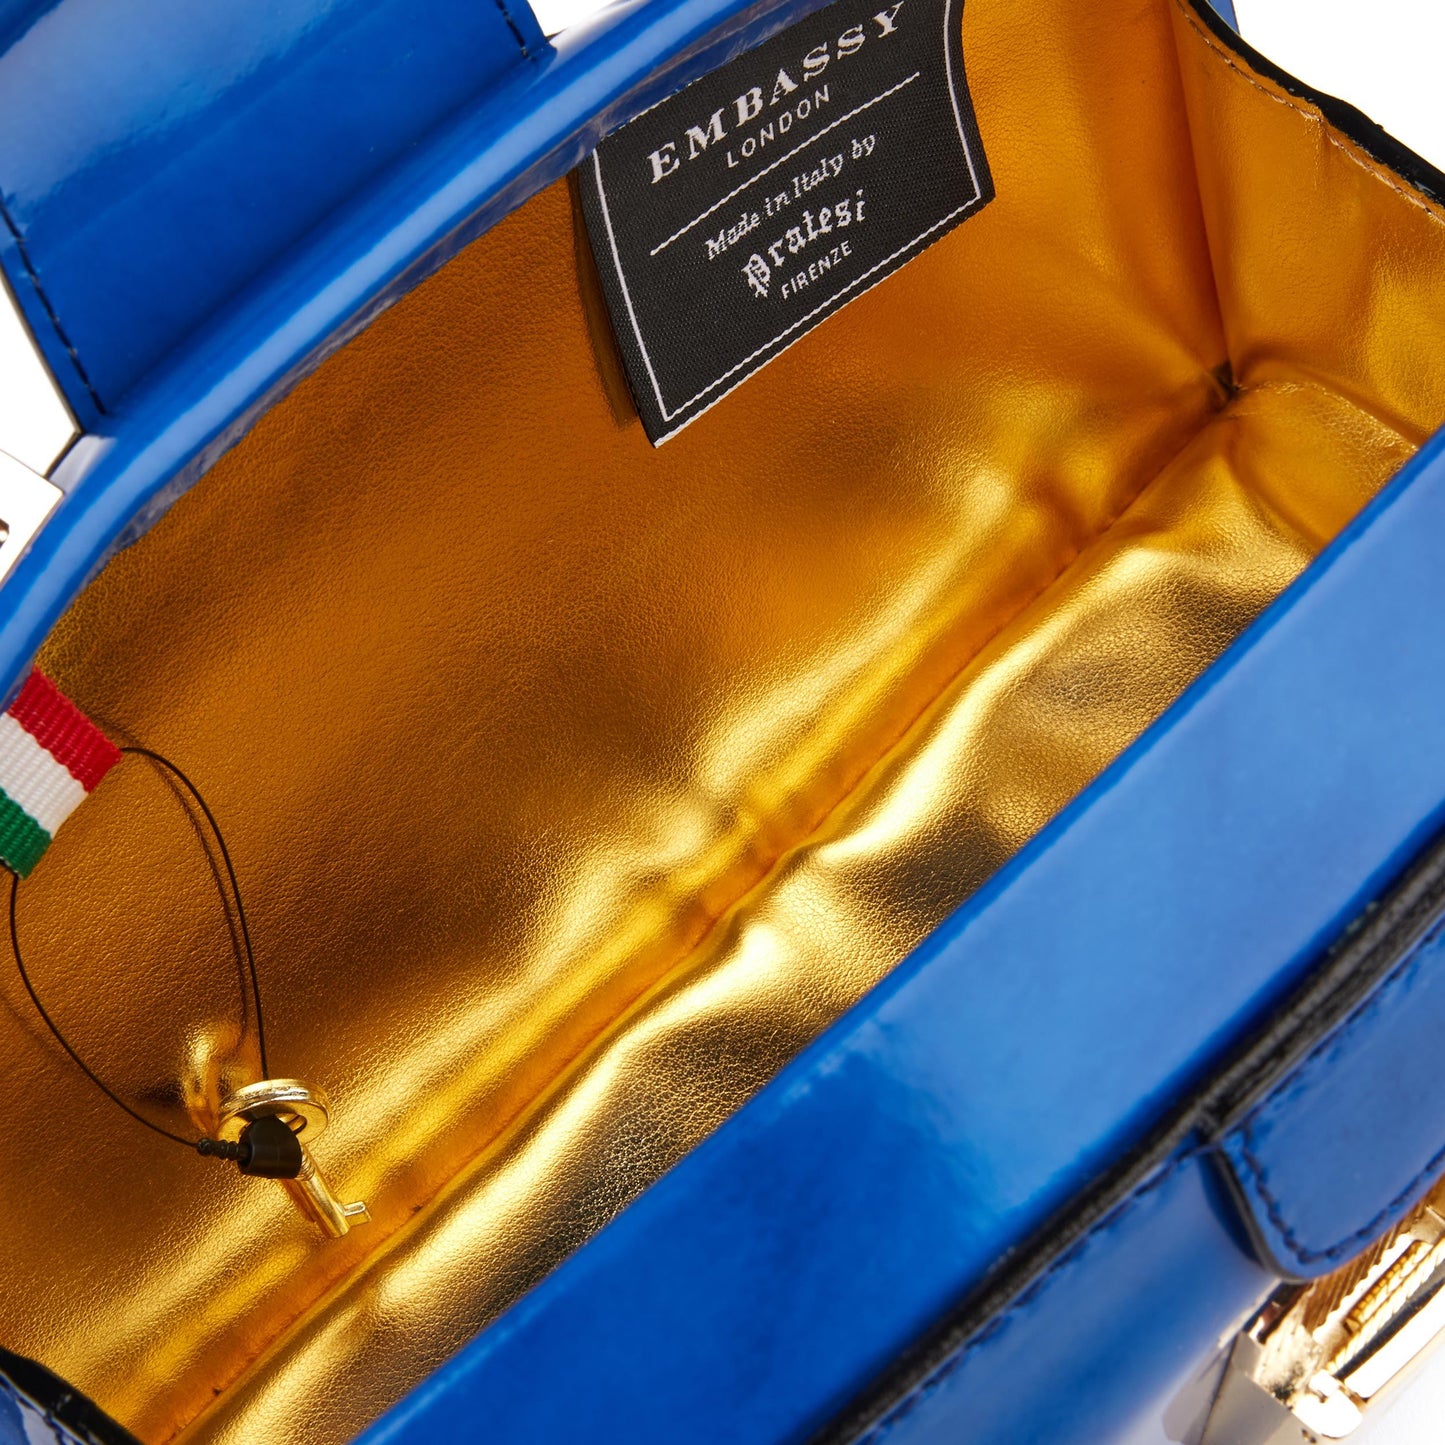 Gazelle Mini - Blue Handbags Embassy London 